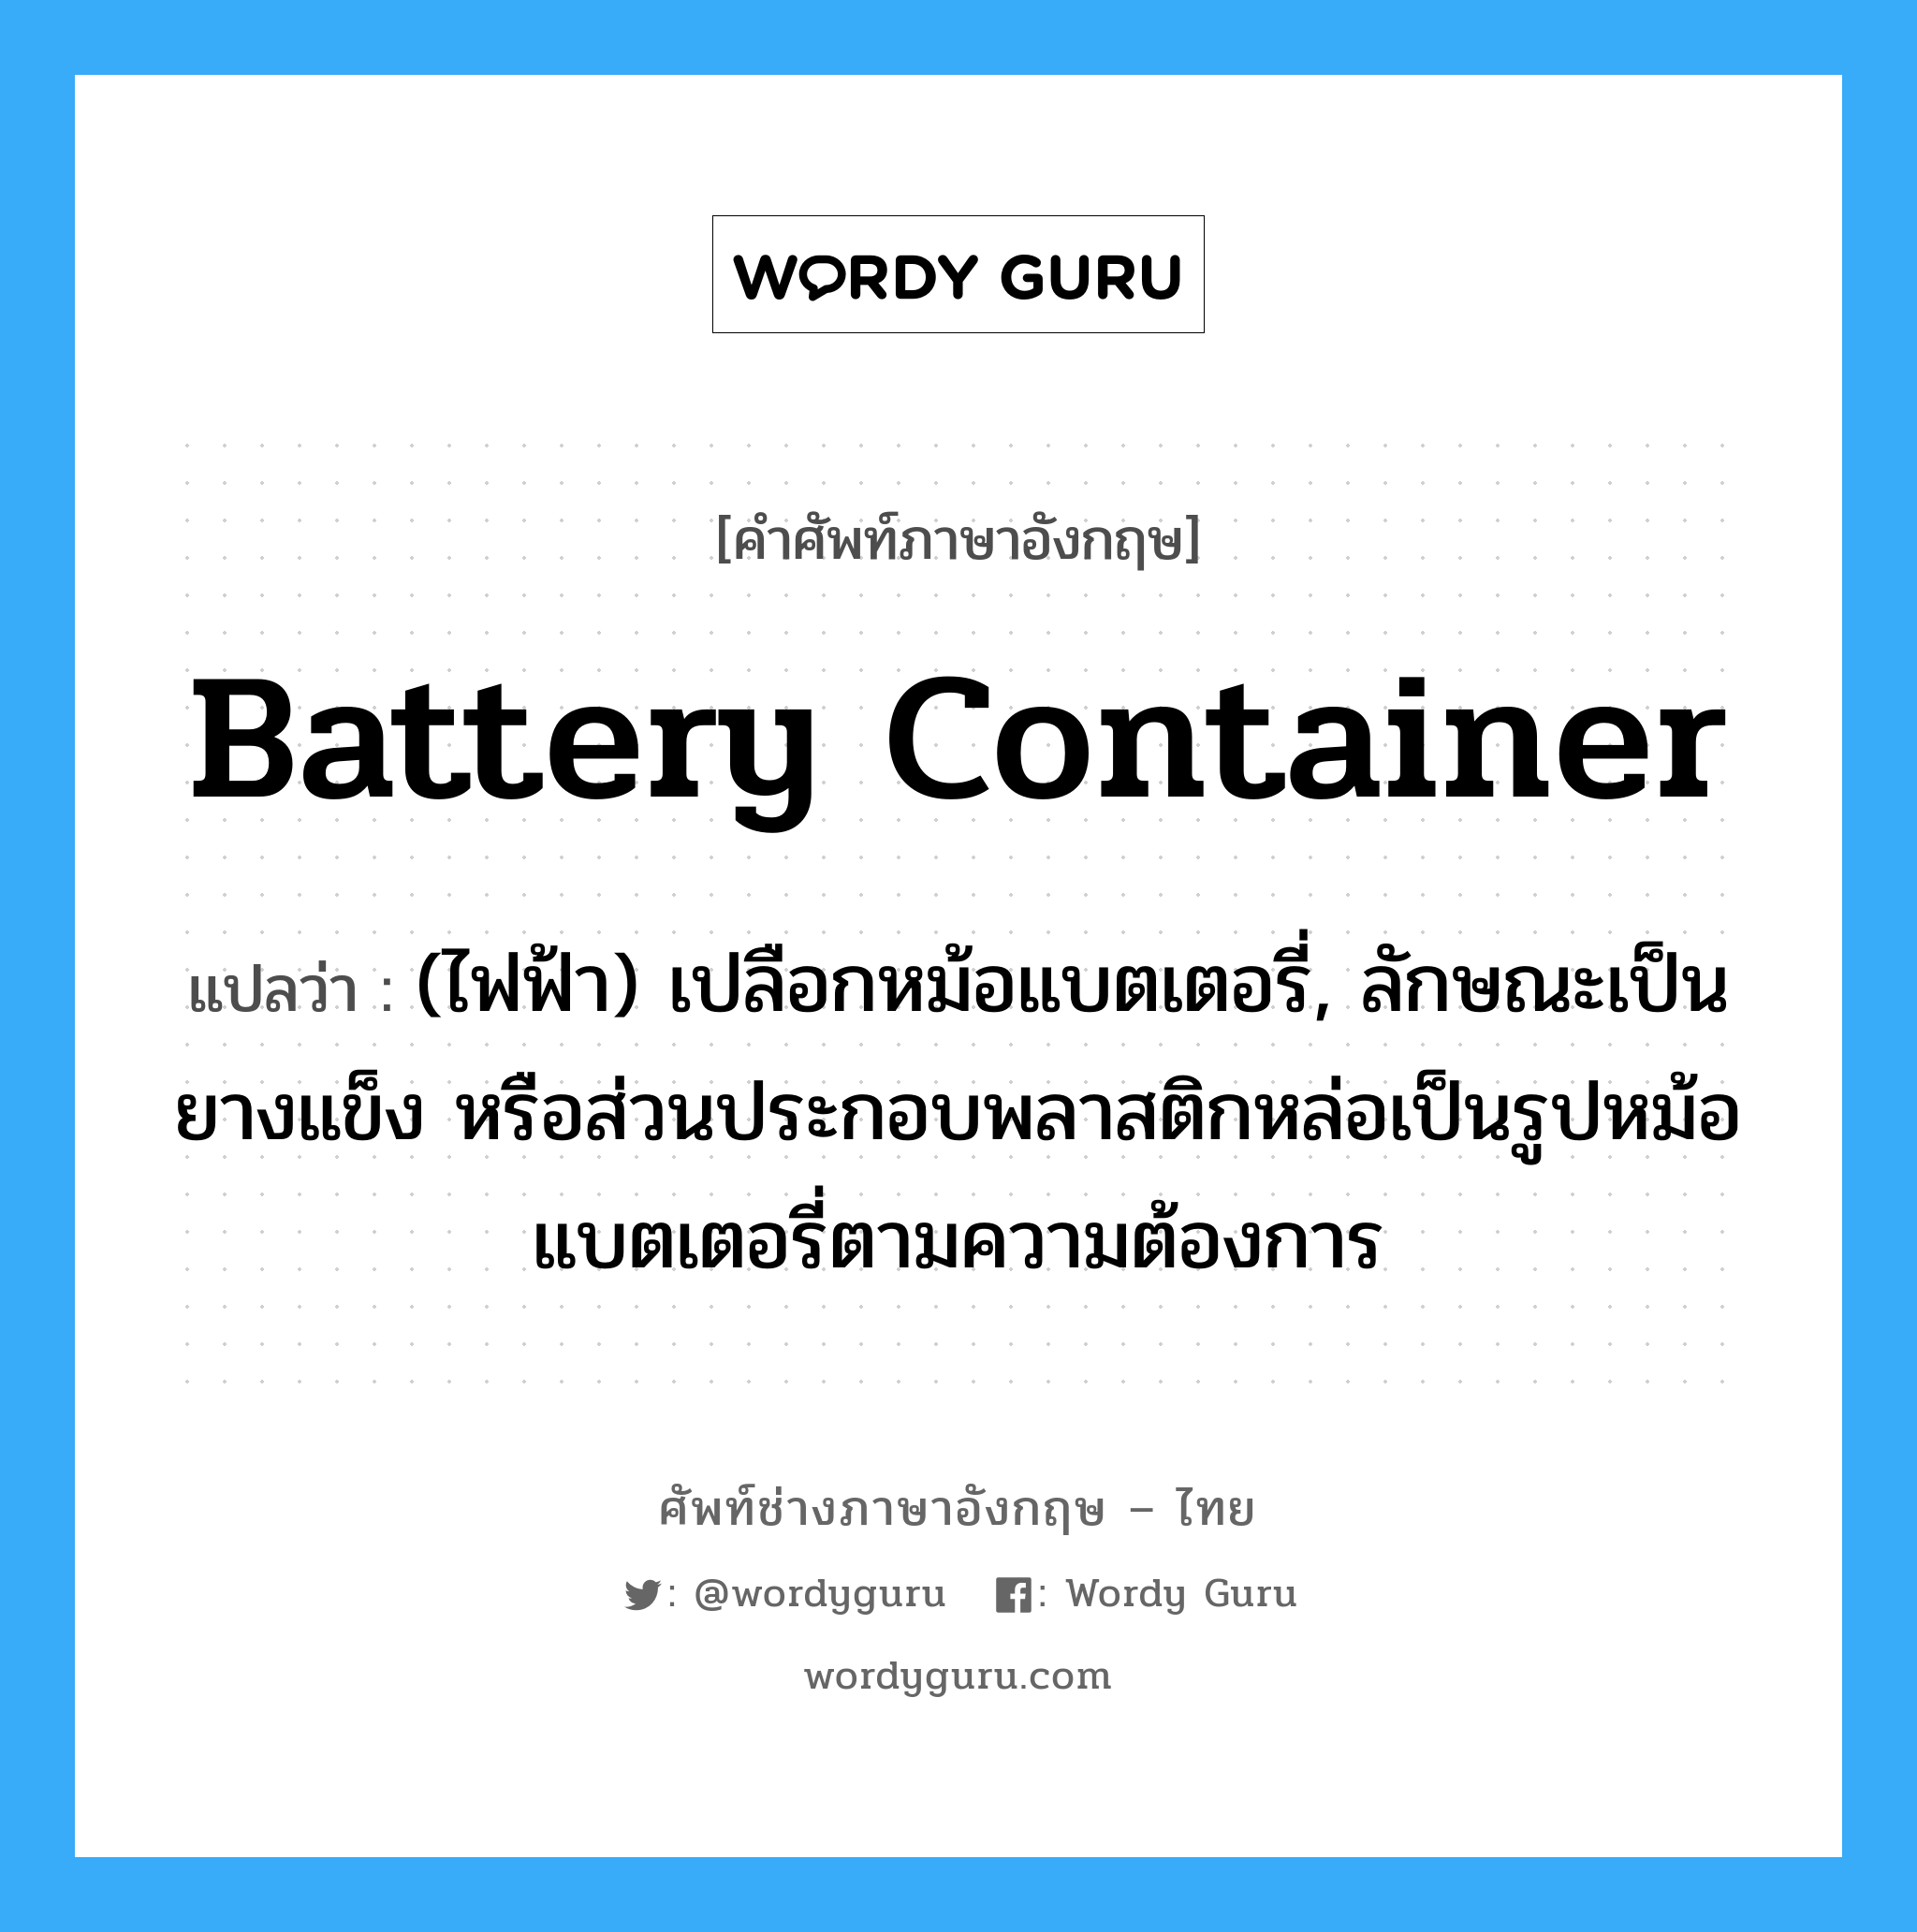 battery container แปลว่า?, คำศัพท์ช่างภาษาอังกฤษ - ไทย battery container คำศัพท์ภาษาอังกฤษ battery container แปลว่า (ไฟฟ้า) เปลือกหม้อแบตเตอรี่, ลักษณะเป็นยางแข็ง หรือส่วนประกอบพลาสติกหล่อเป็นรูปหม้อแบตเตอรี่ตามความต้องการ